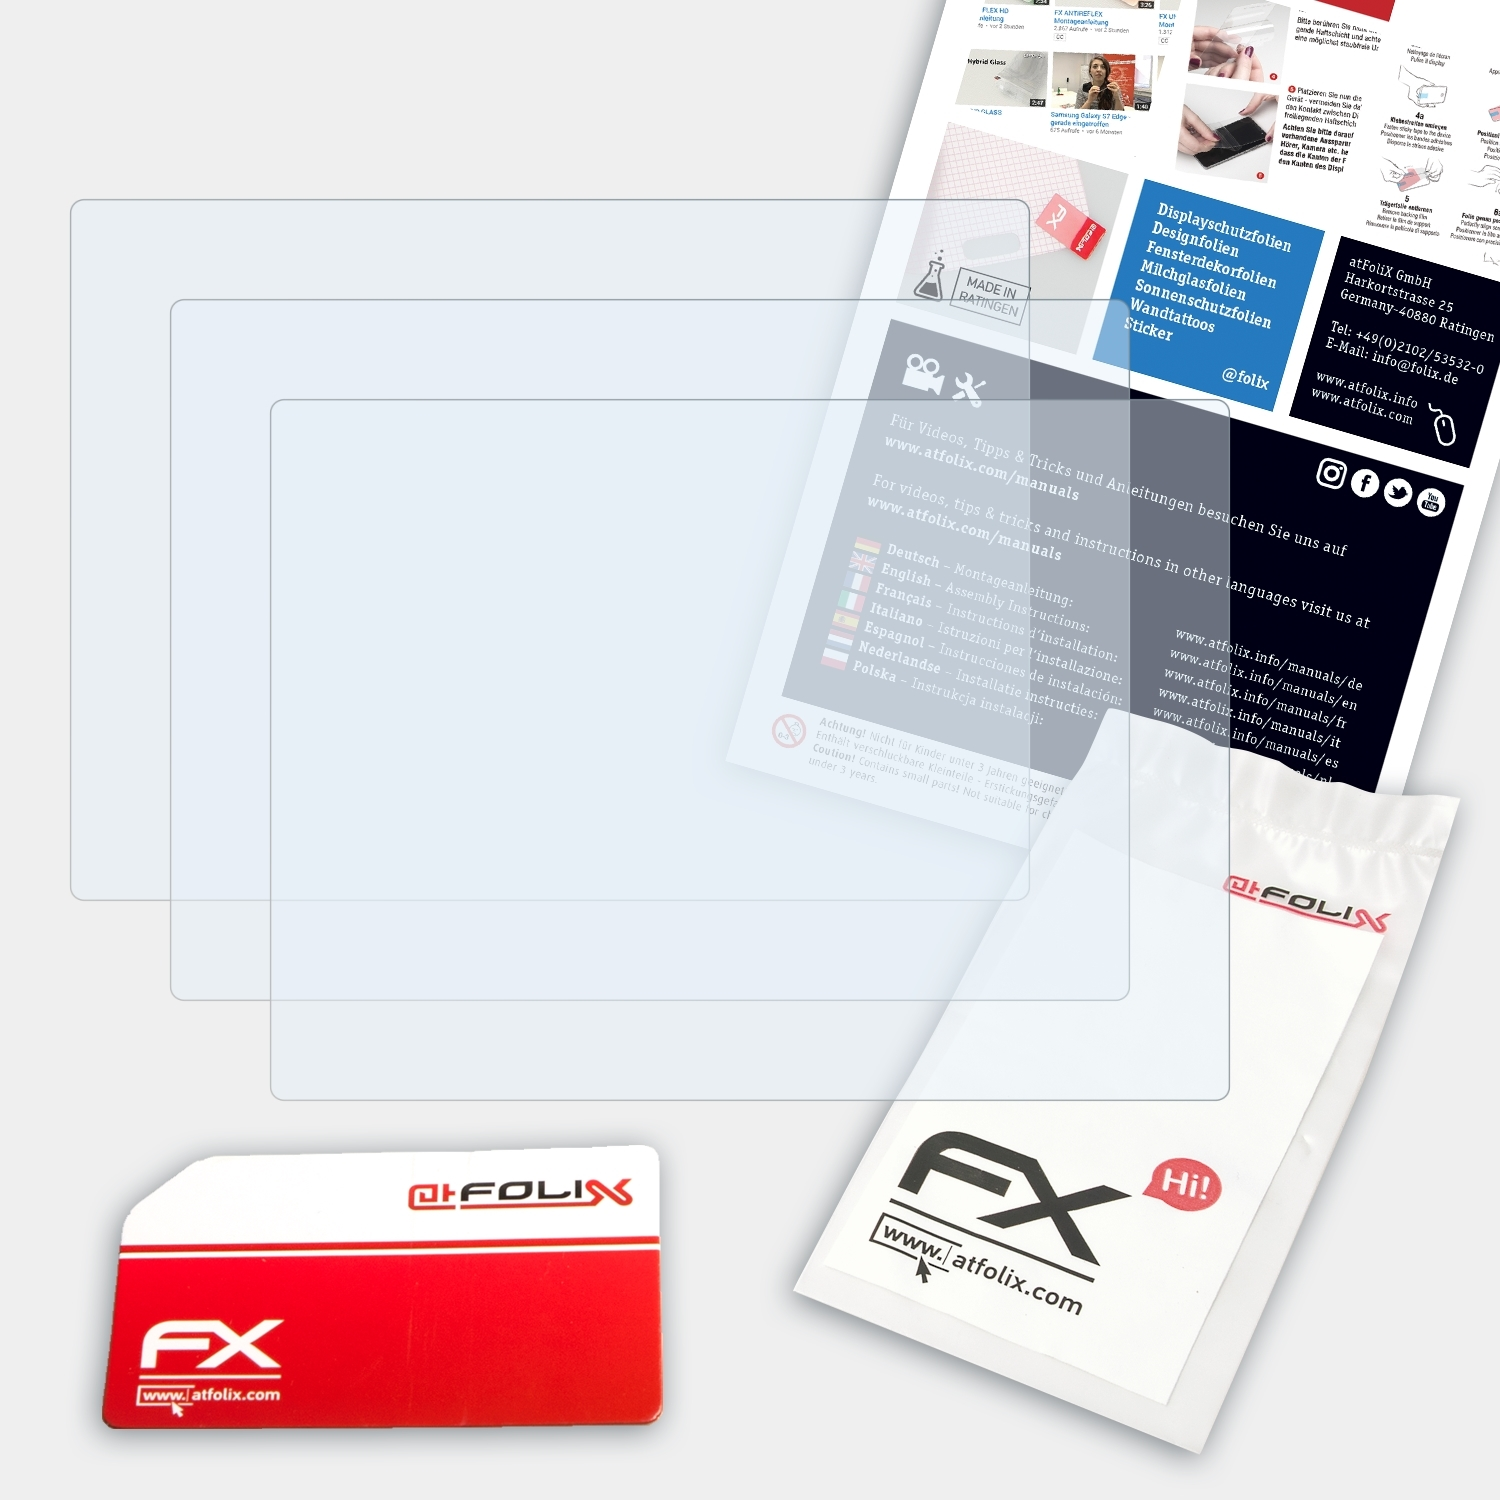 ATFOLIX 3x FX-Clear Sony (ILCE-9)) a9 Displayschutz(für Alpha